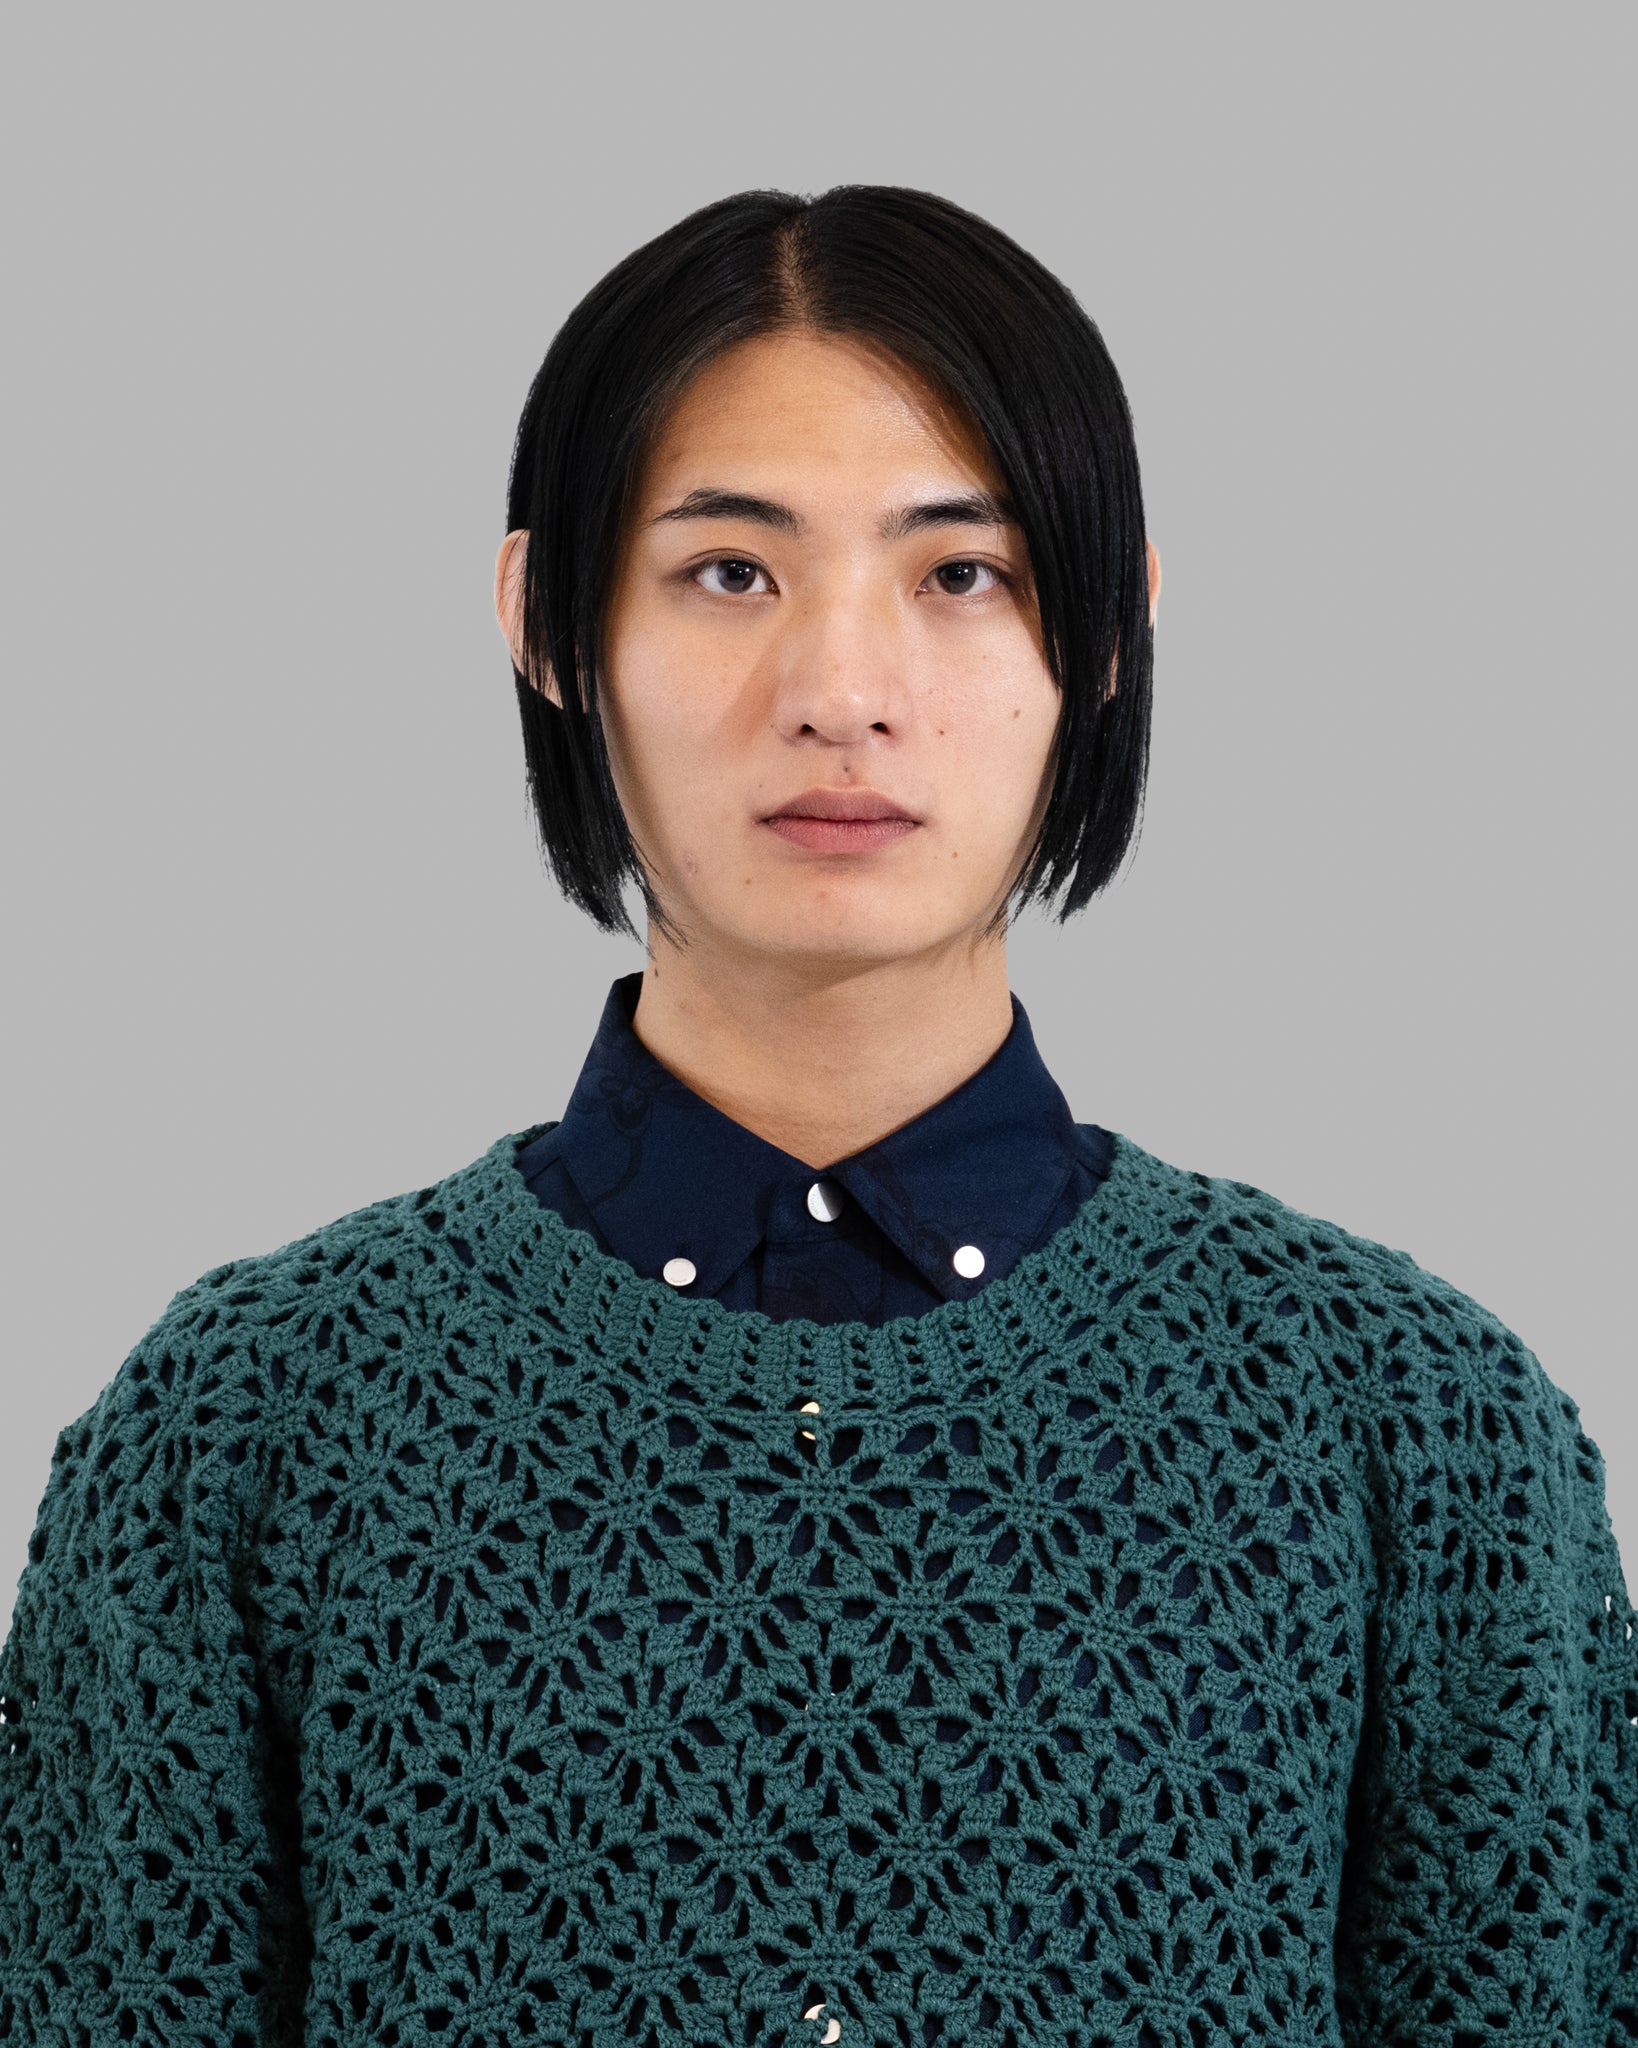 Suéter de jabón de tejido de crochet -Green